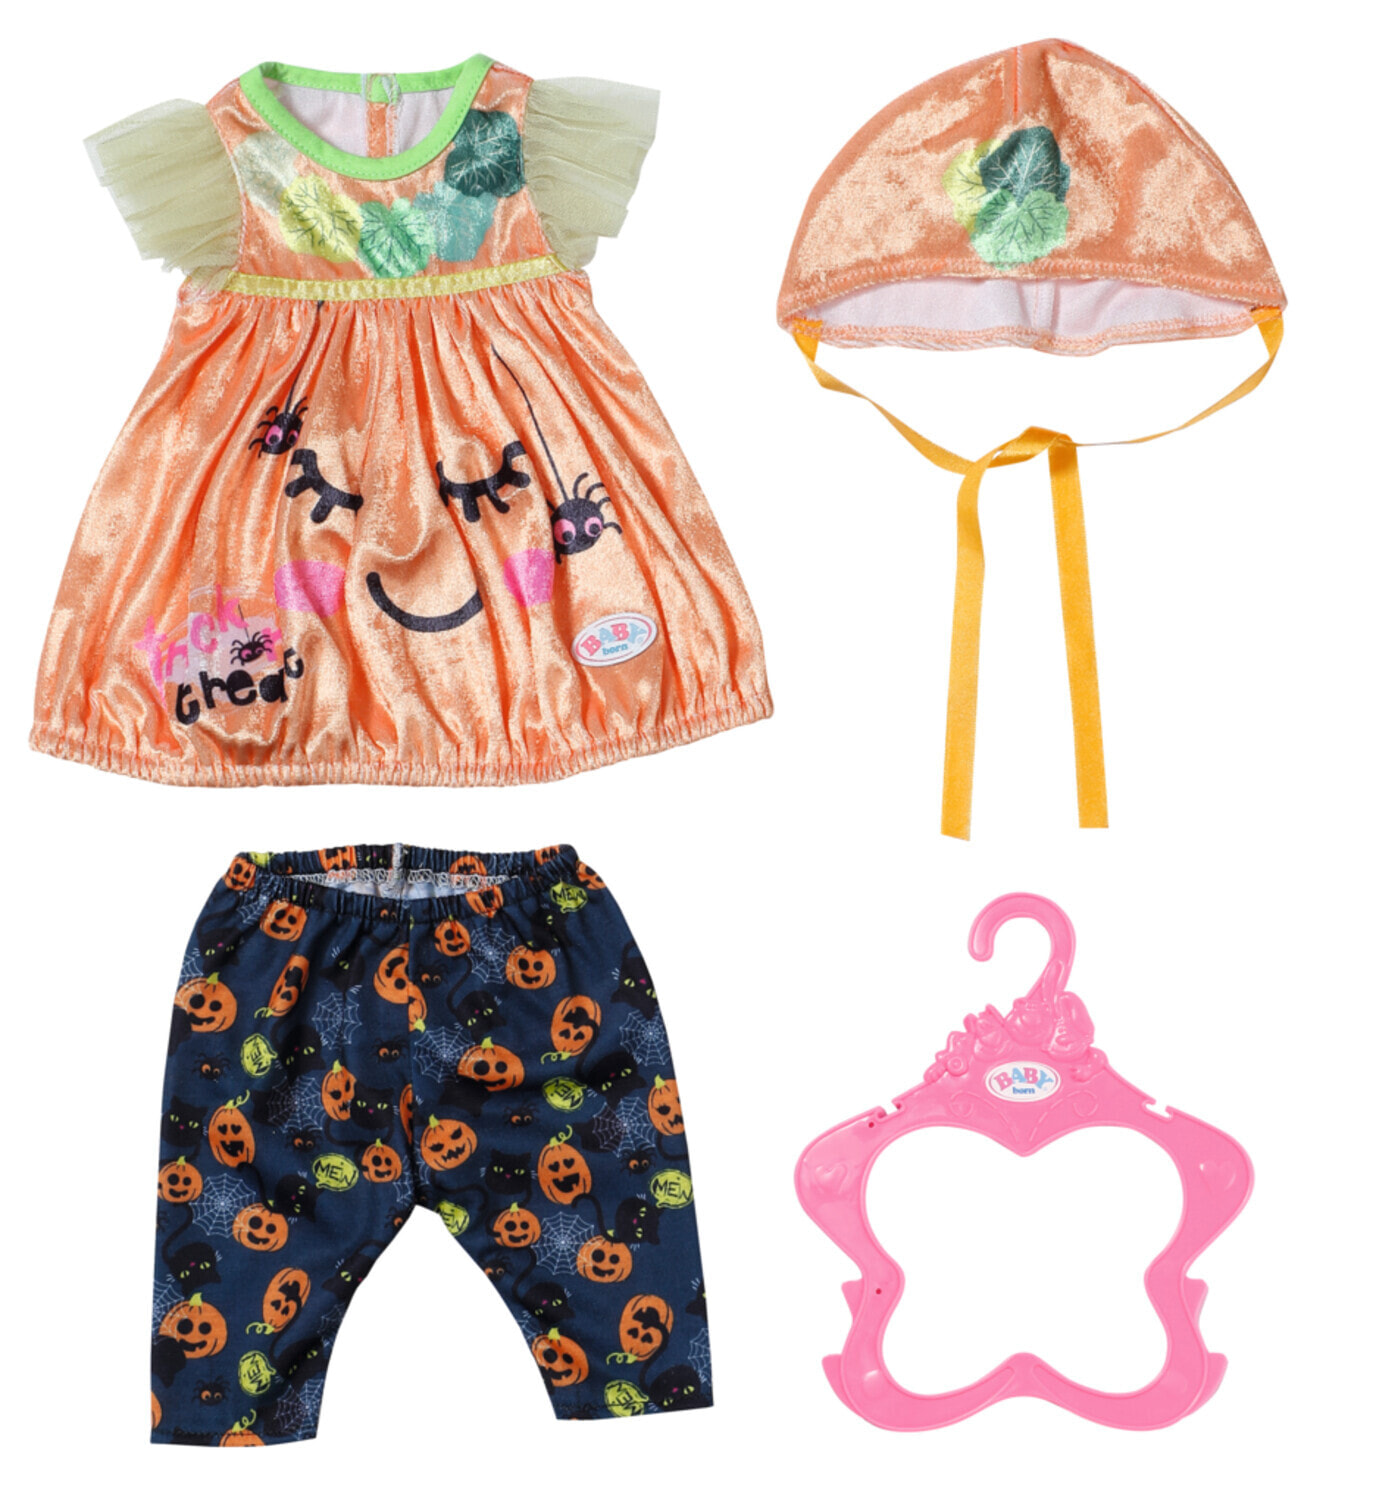 BABY born Halloween Outfit 43cm Комплект одежды для куклы 834275